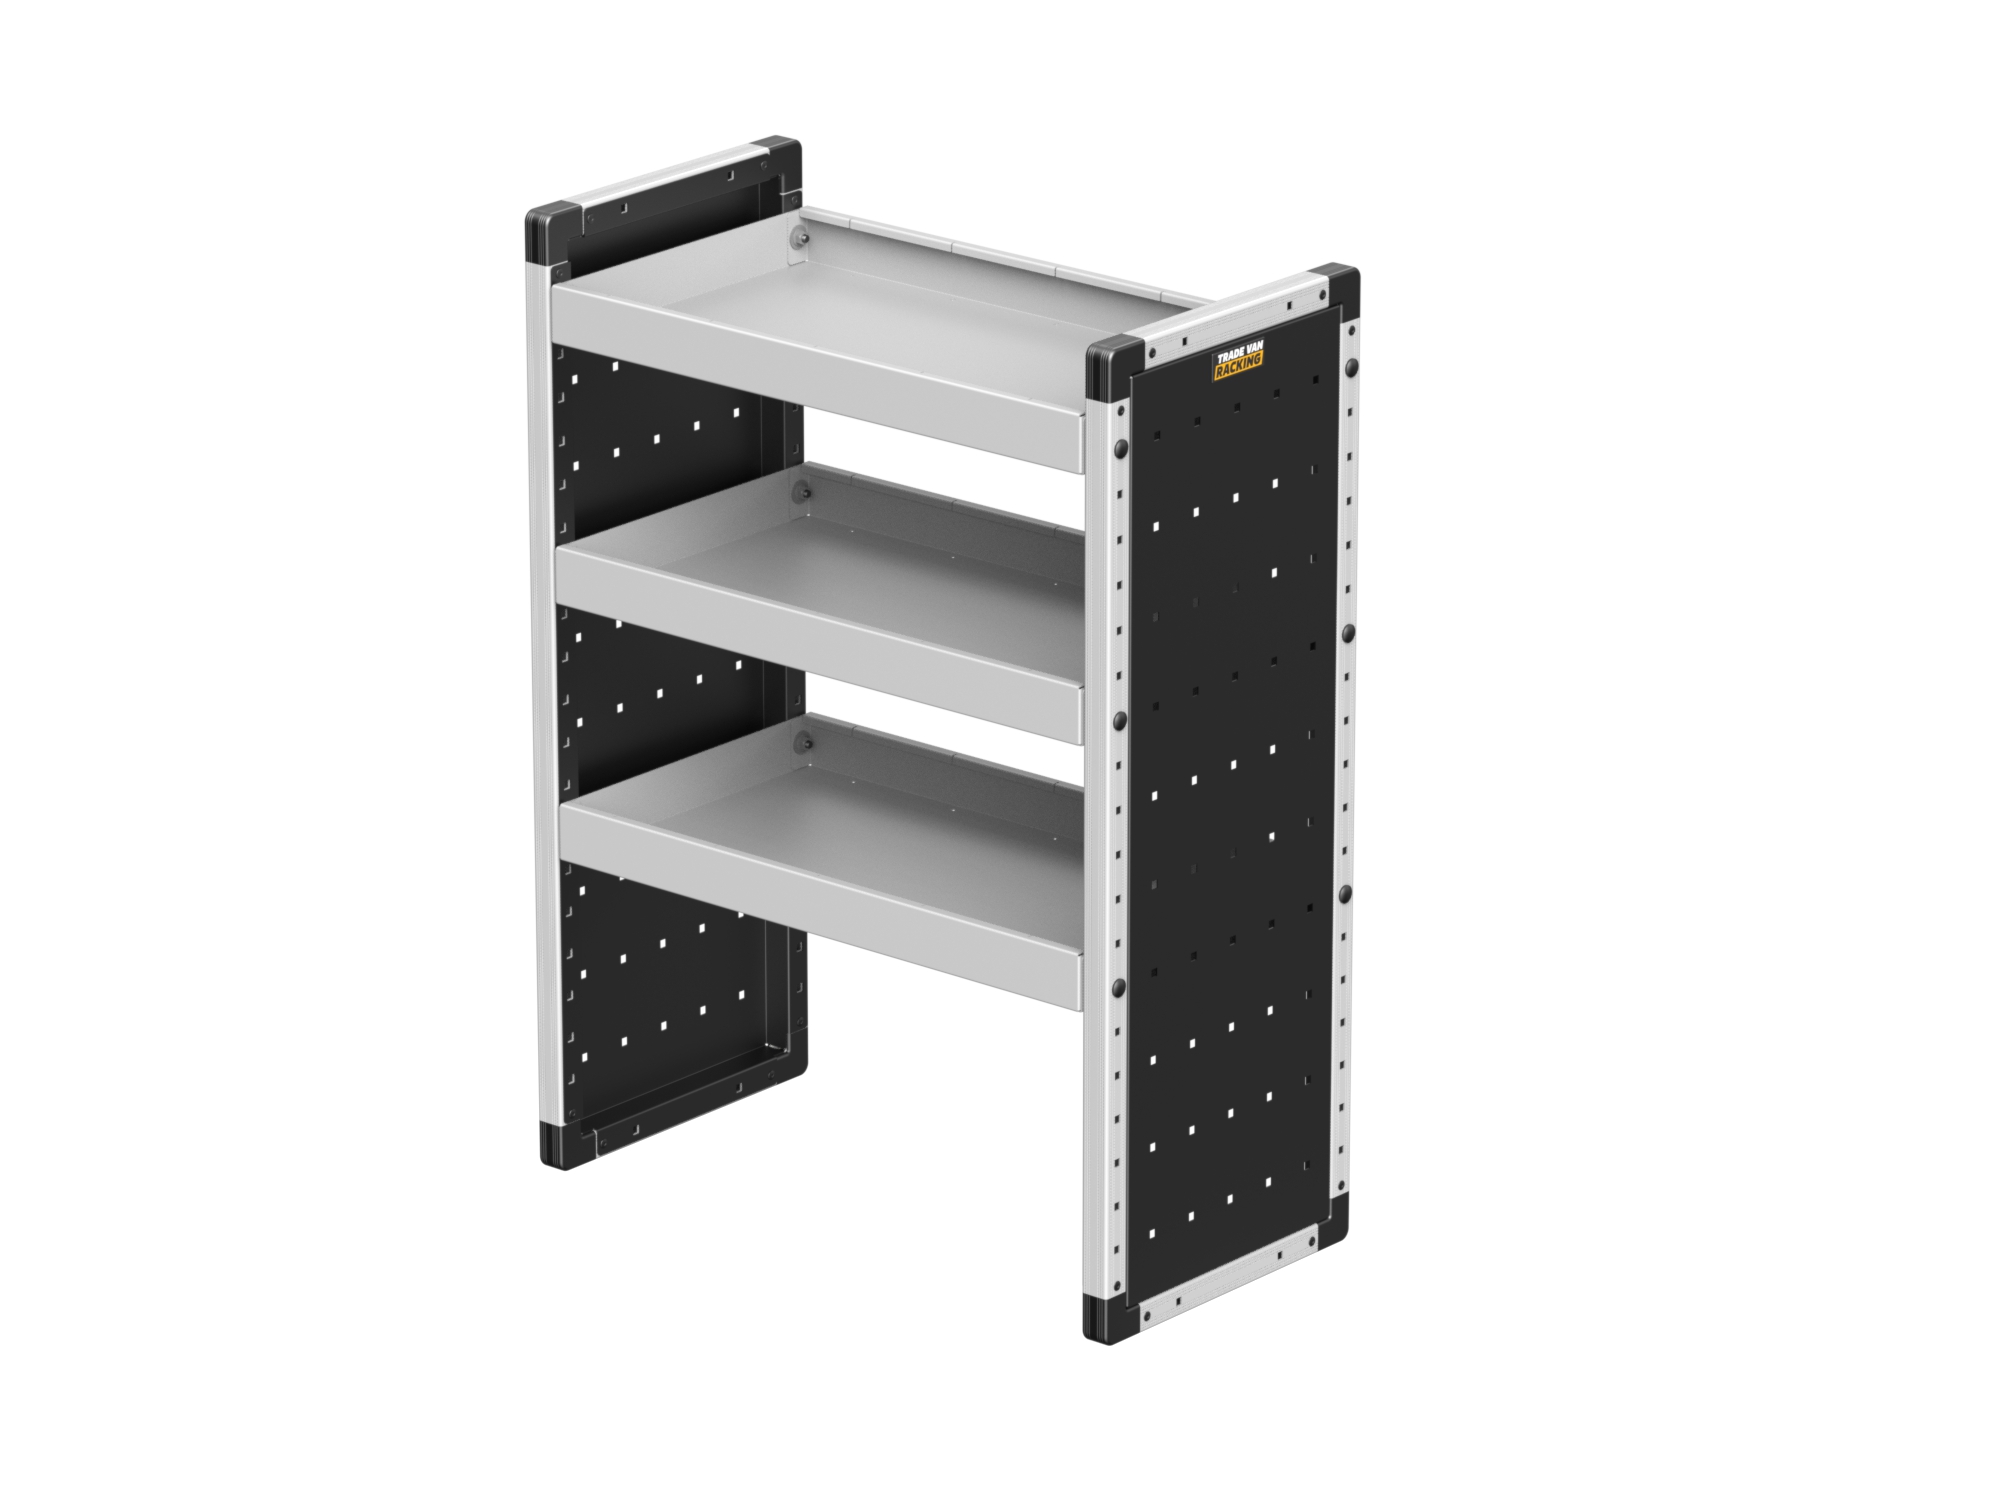 Trade Van Racking - Single Unit - 3 Straight Shelves - 750mm (w) x 1009mm (h) - TVR-101